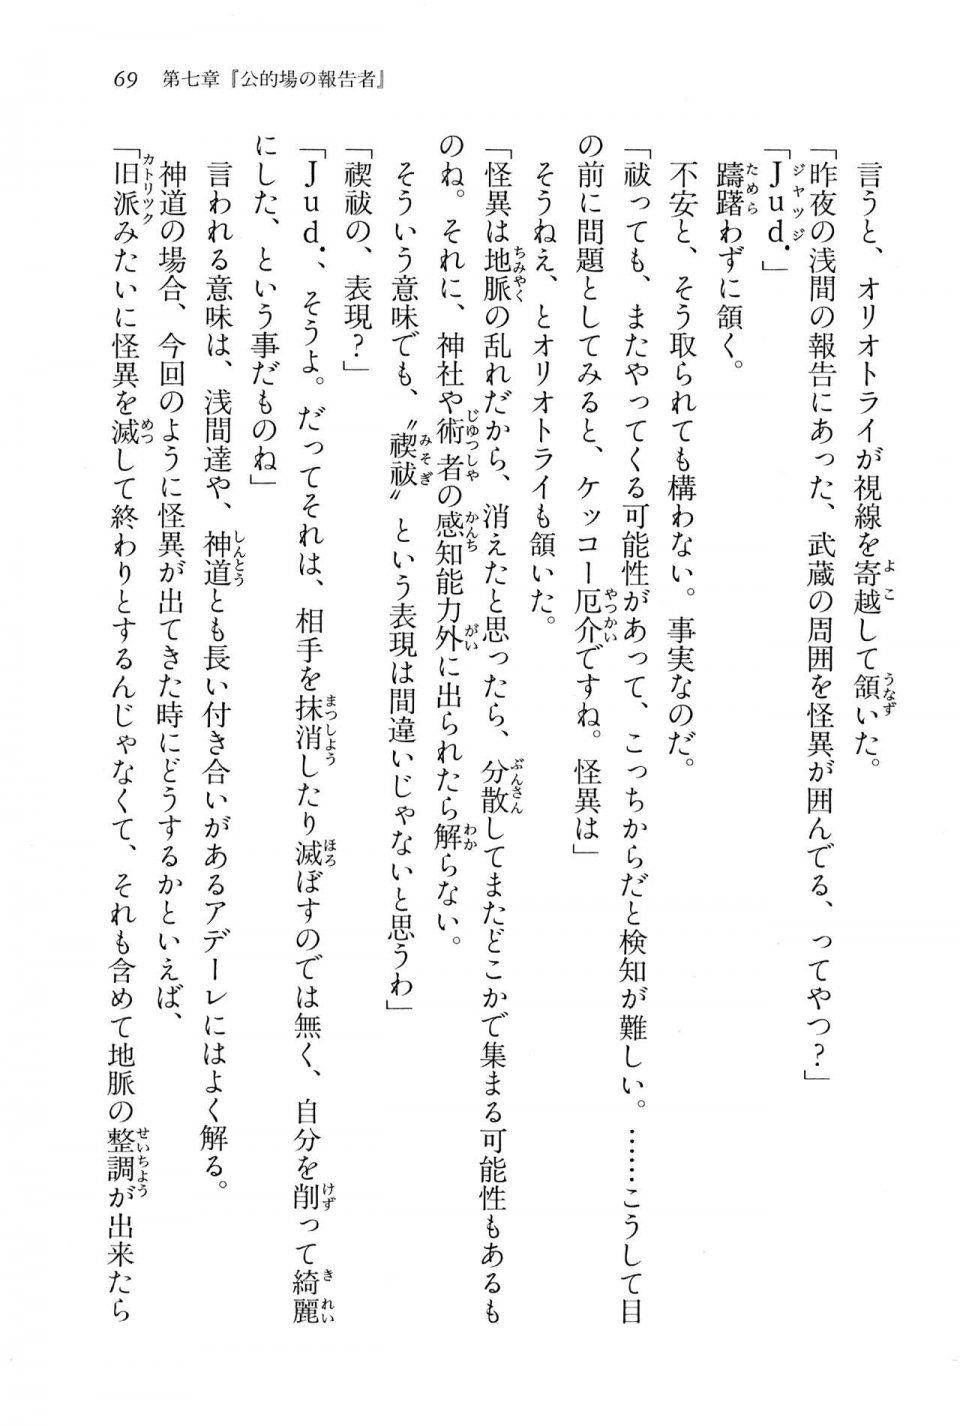 Kyoukai Senjou no Horizon BD Special Mininovel Vol 6(3B) - Photo #73